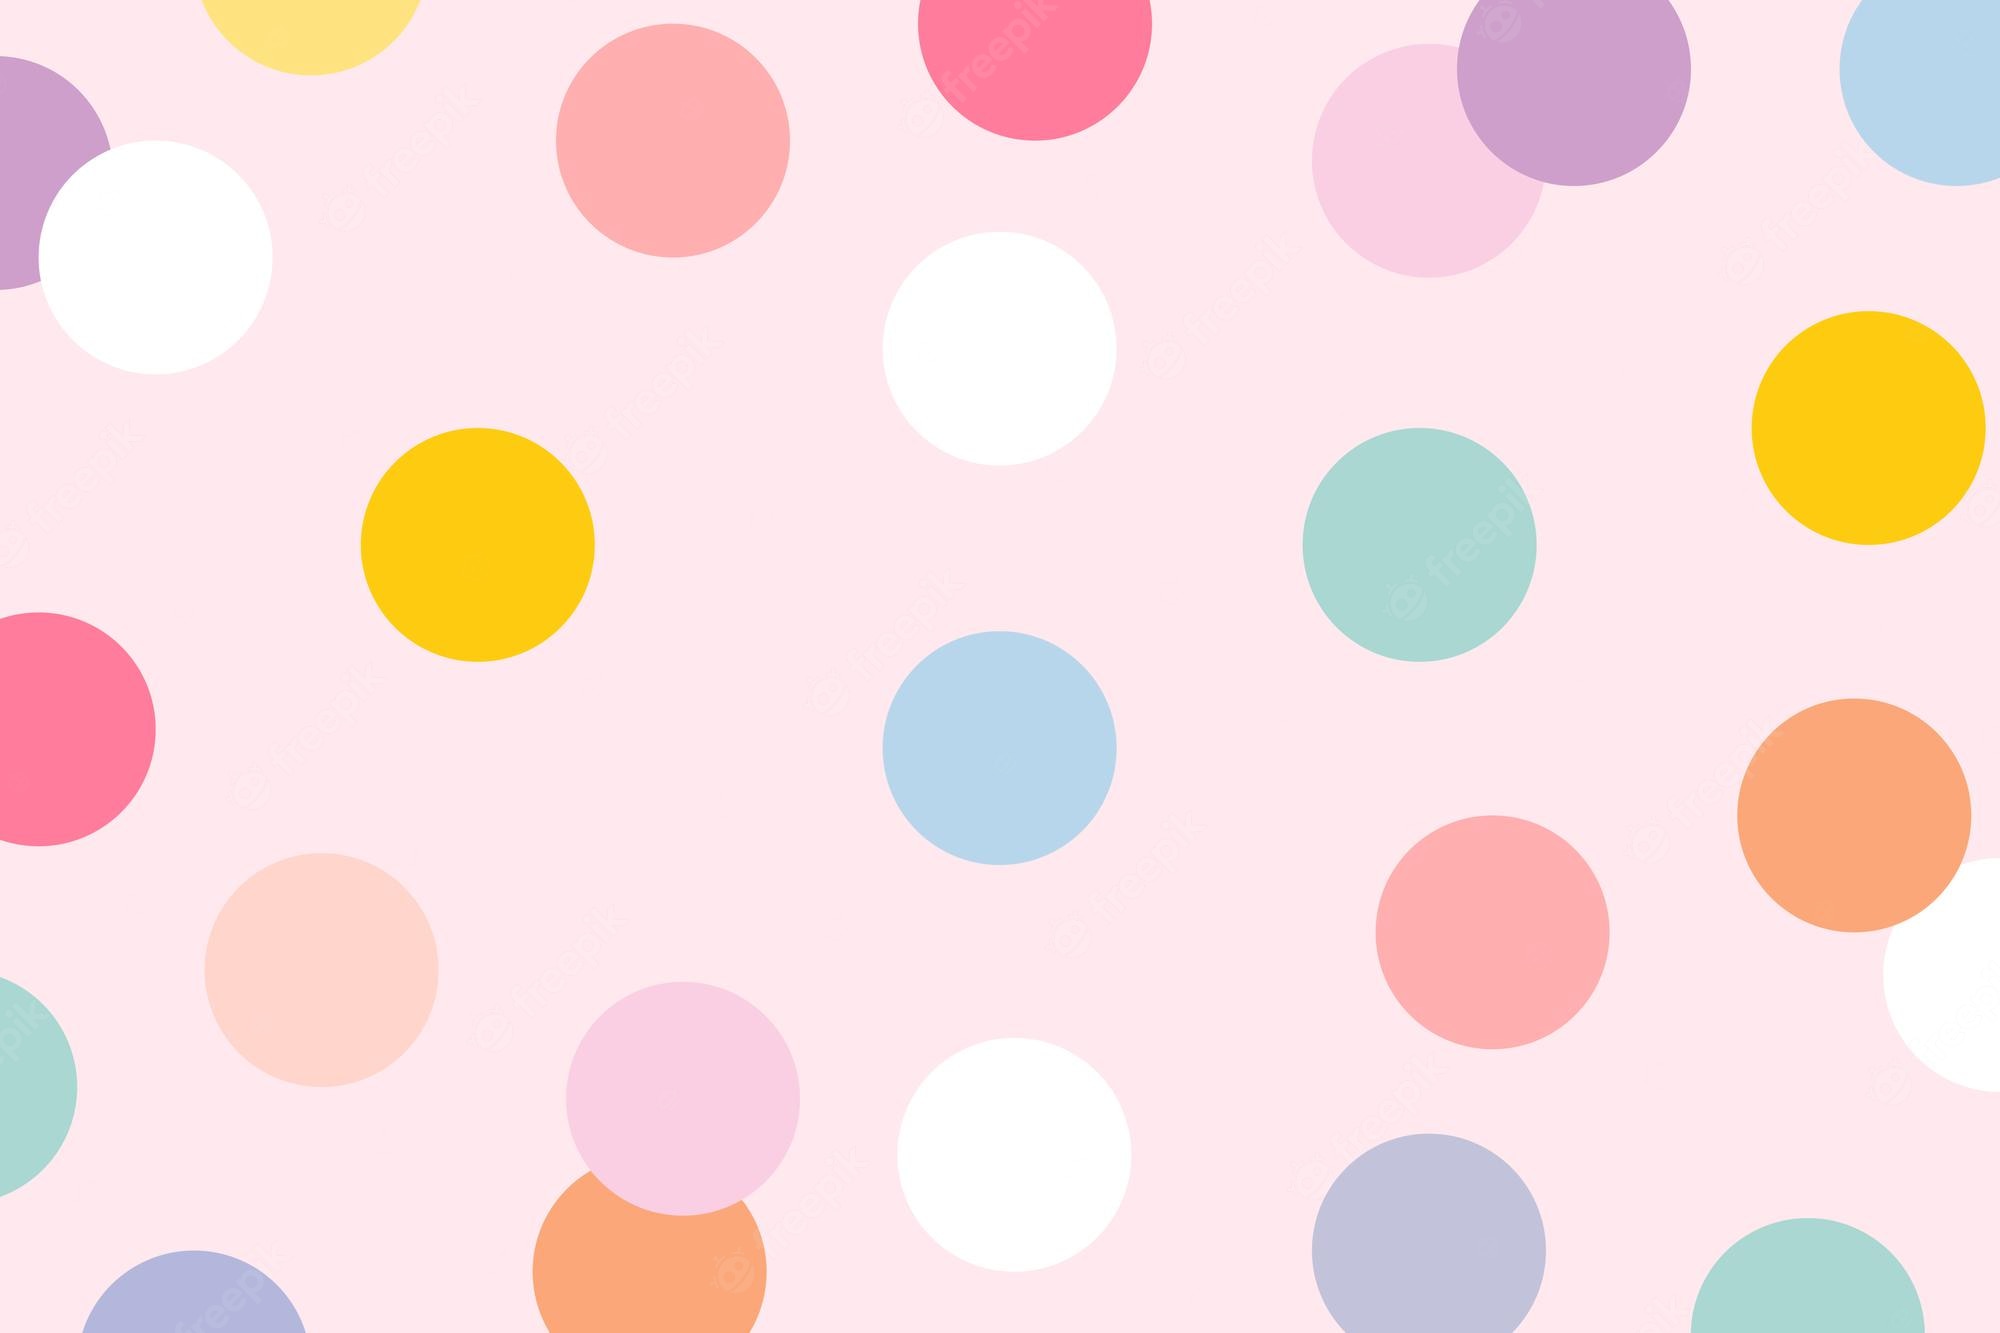 Pink Polka Dots Wallpapers Wallpaper Cave